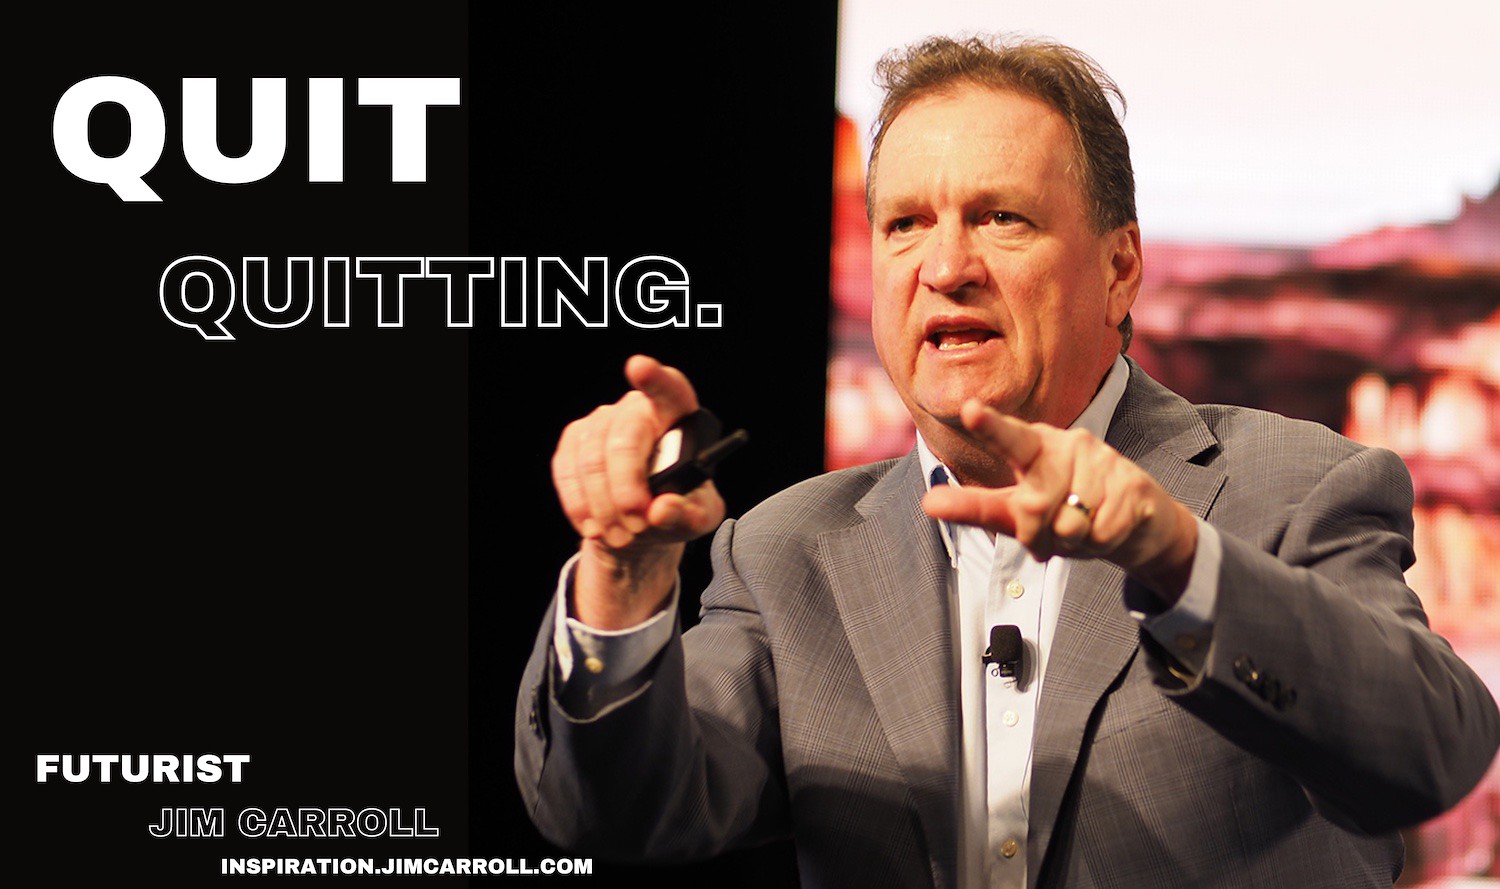 "Quit quitting" - Futurist Jim Carroll